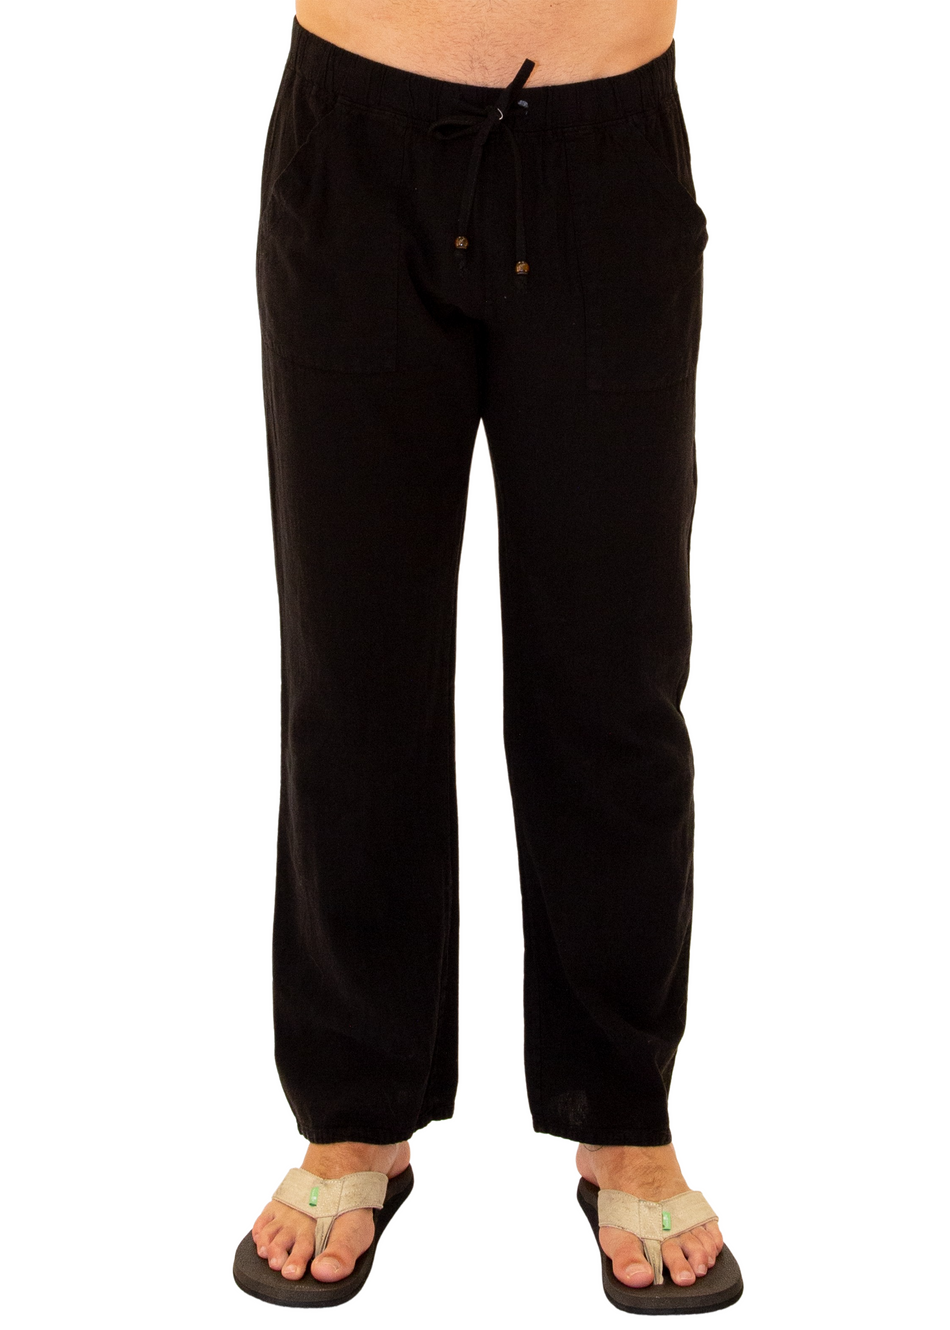 GZ1010 - Black Cotton Drawstring Waist Pants